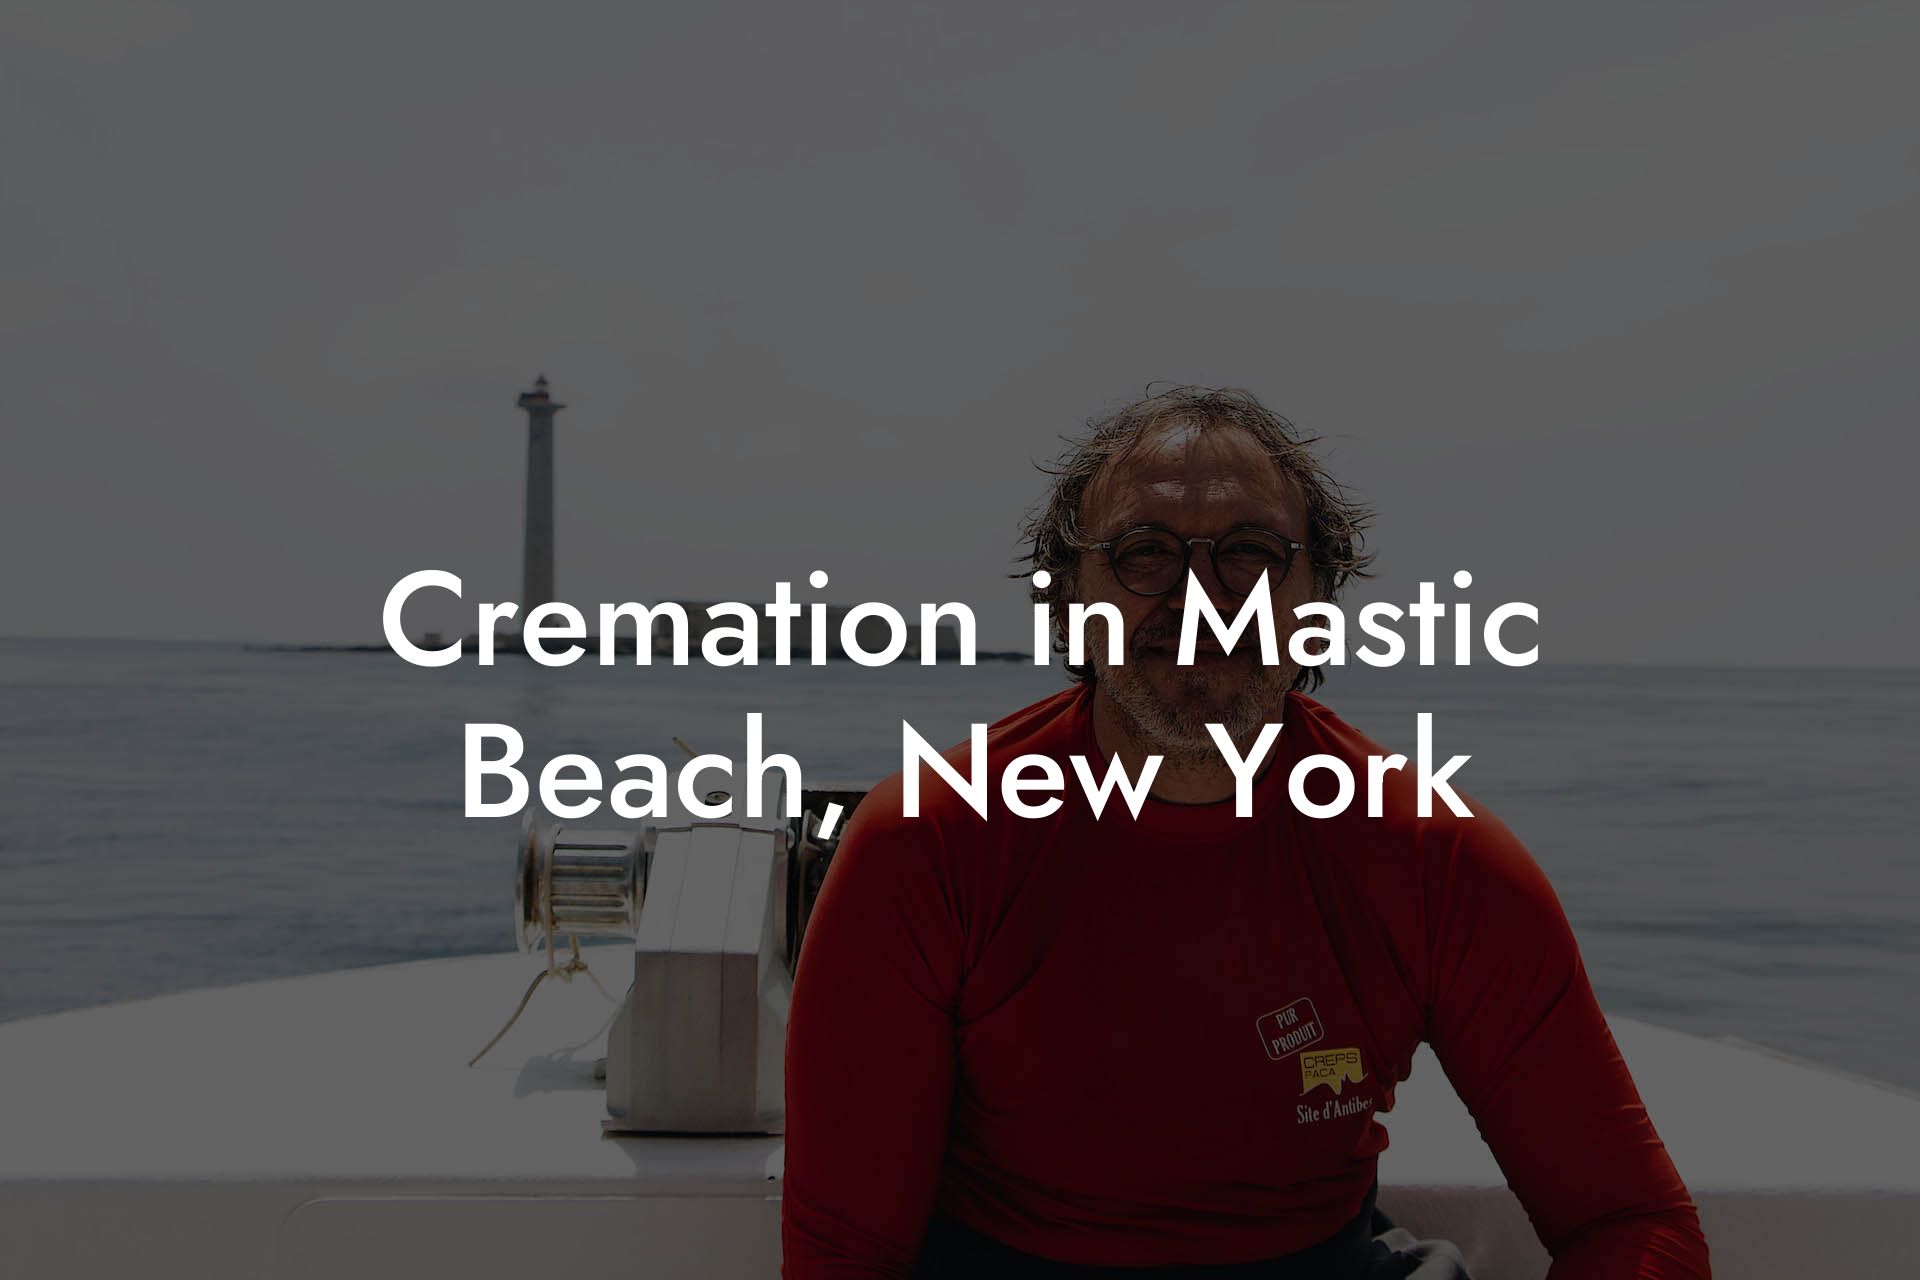 Cremation in Mastic Beach, New York